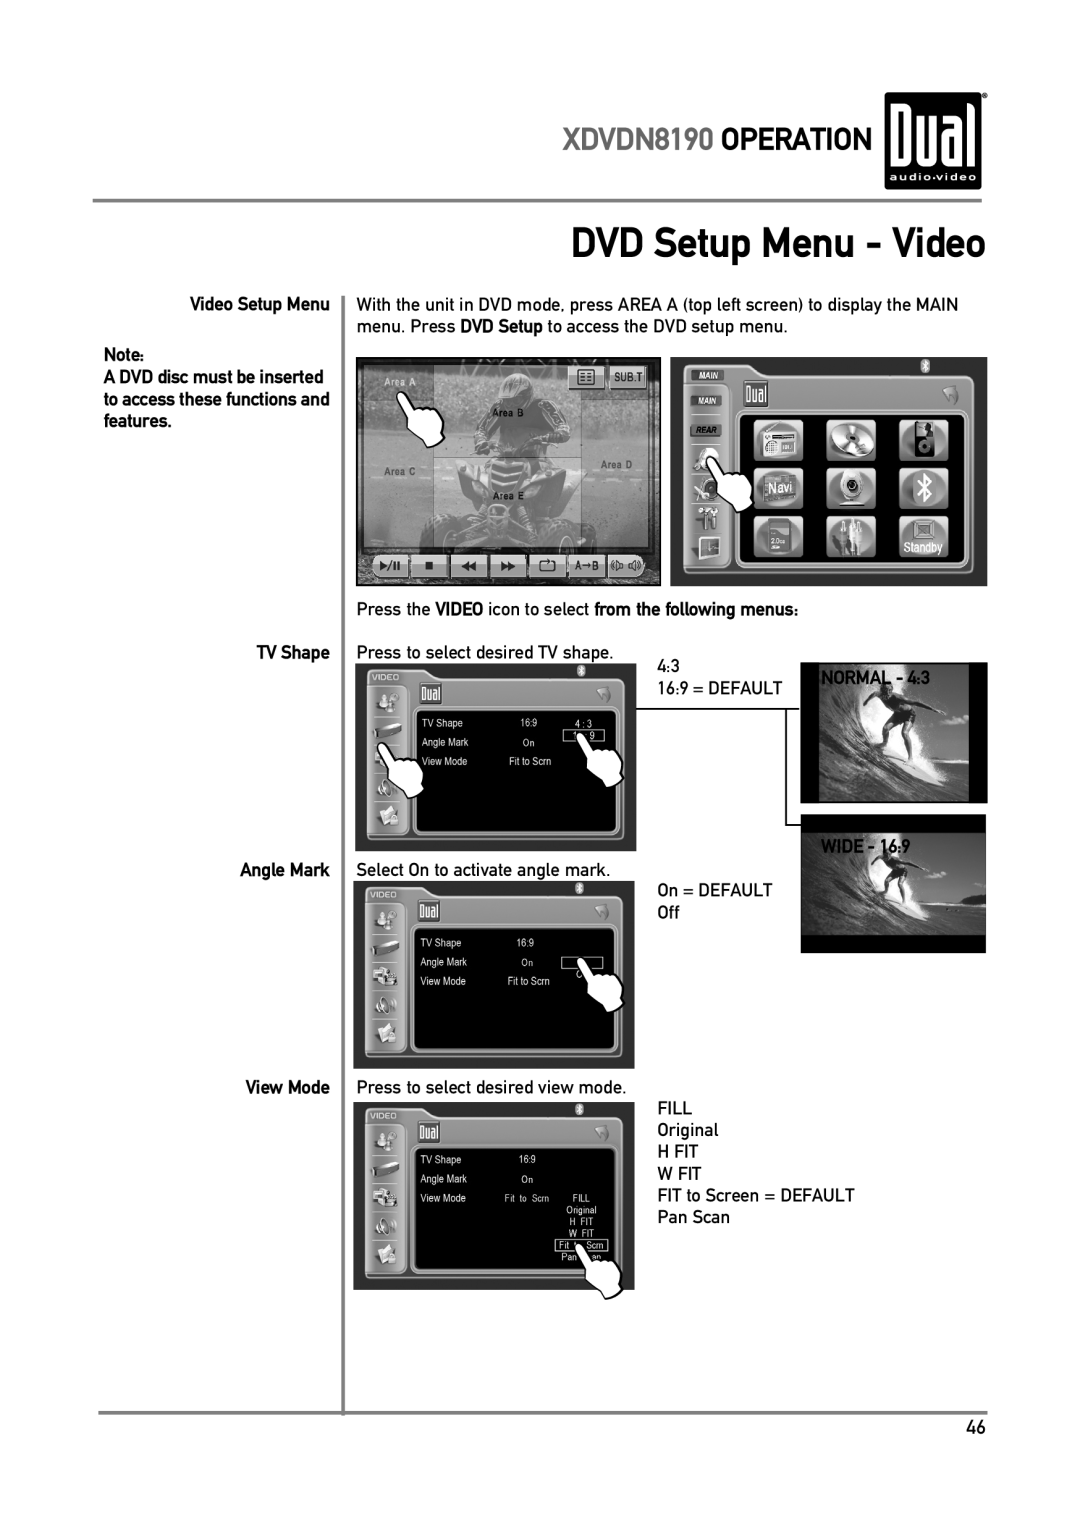 Dual DVD Setup Menu - Video, XDVDN8190 OPERATION, Video Setup Menu, TV Shape Angle Mark, NORMAL - 4:3 WIDE - 16:9 